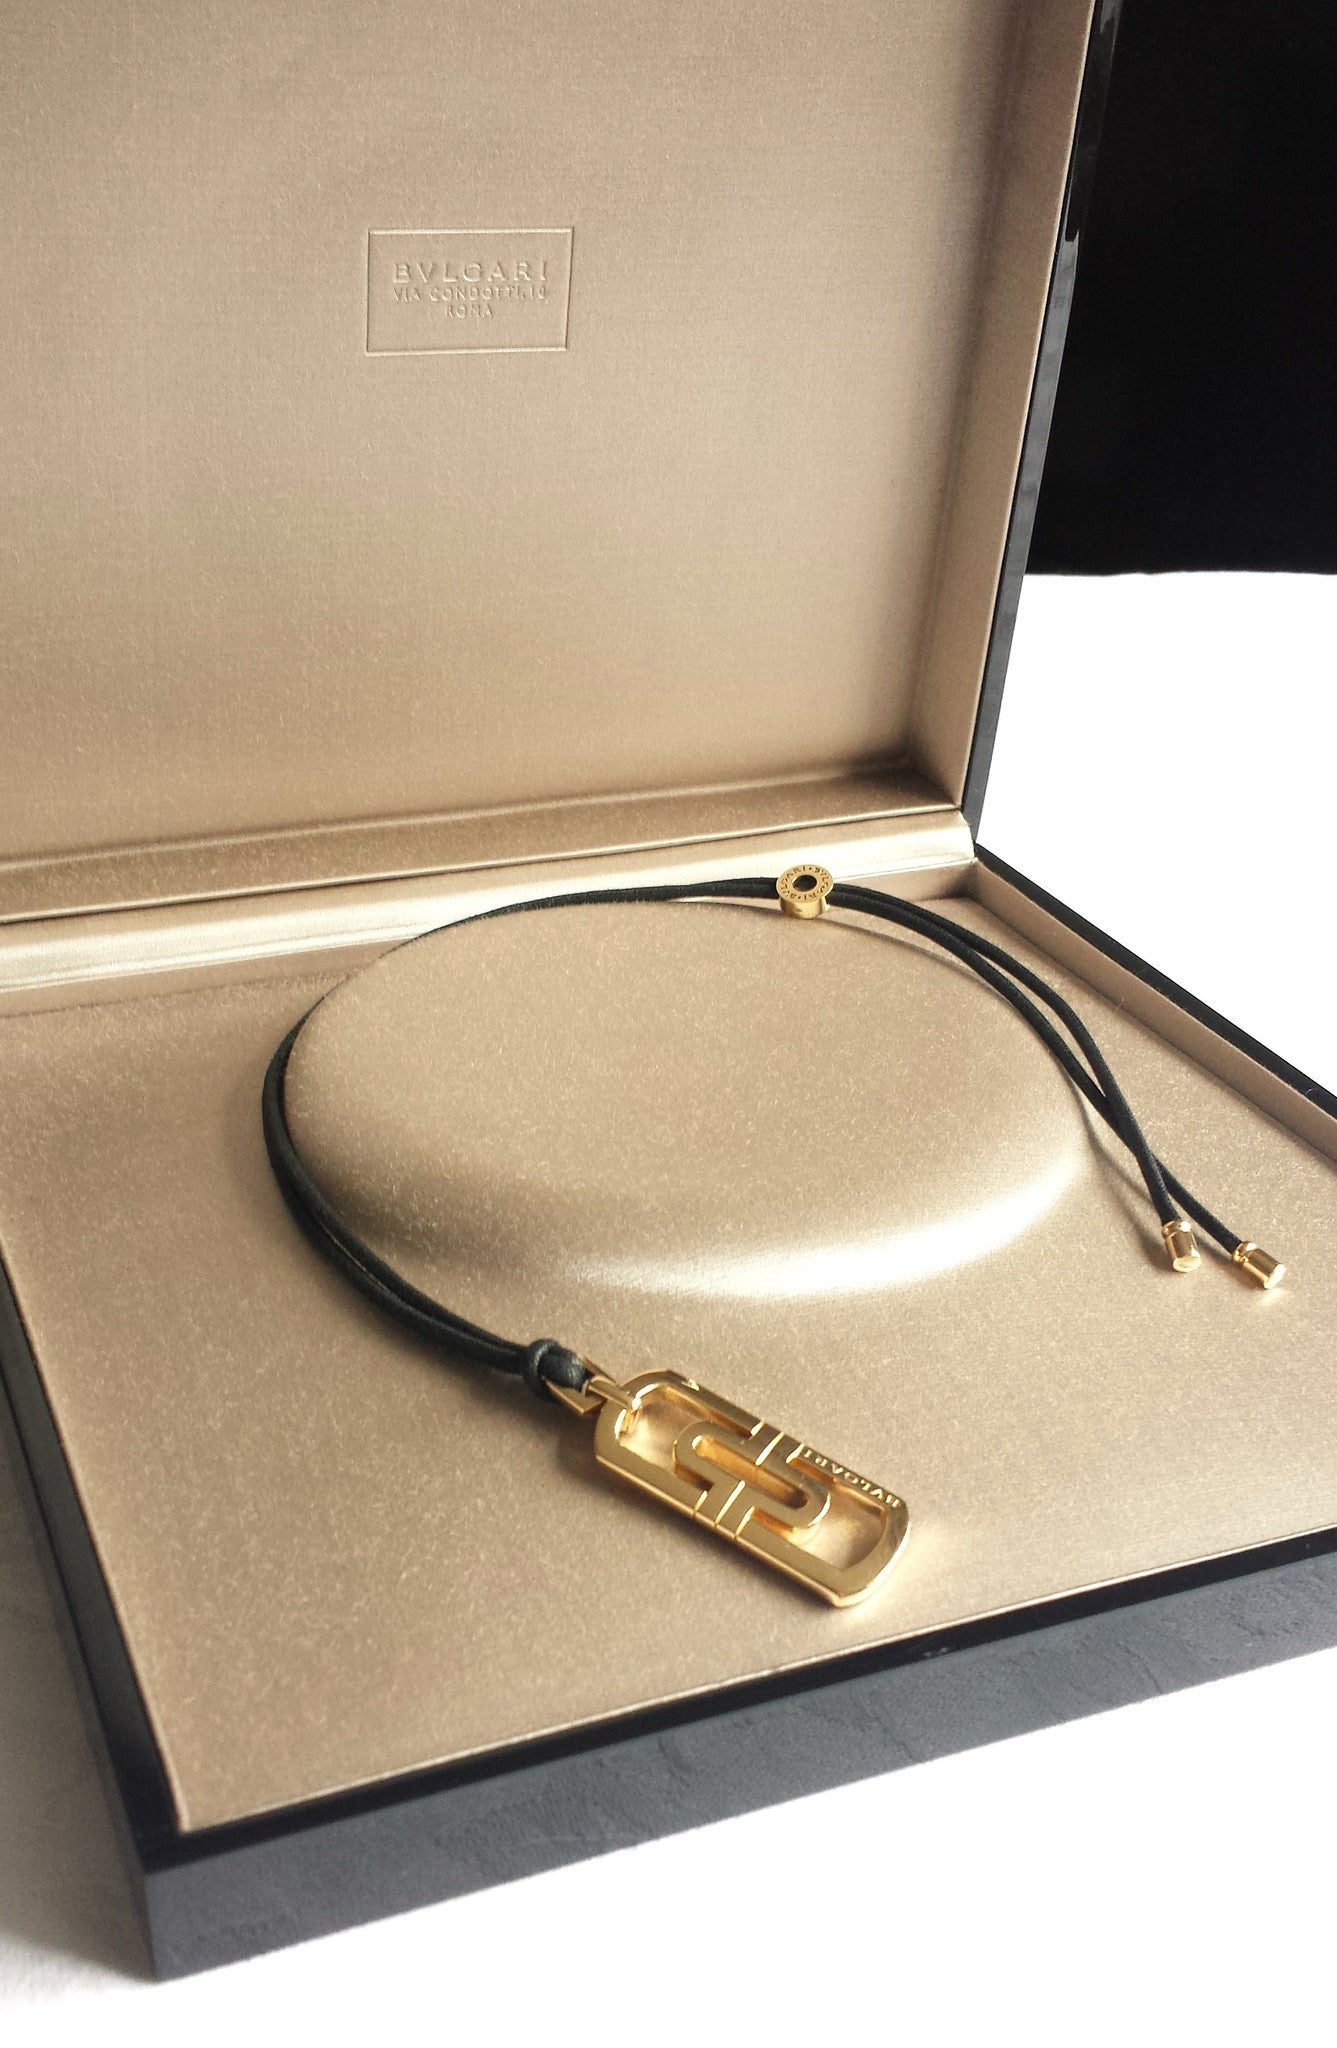 Bulgari Bvlgari Parentesi Necklace in 18k Yellow Gold with Box & Bag